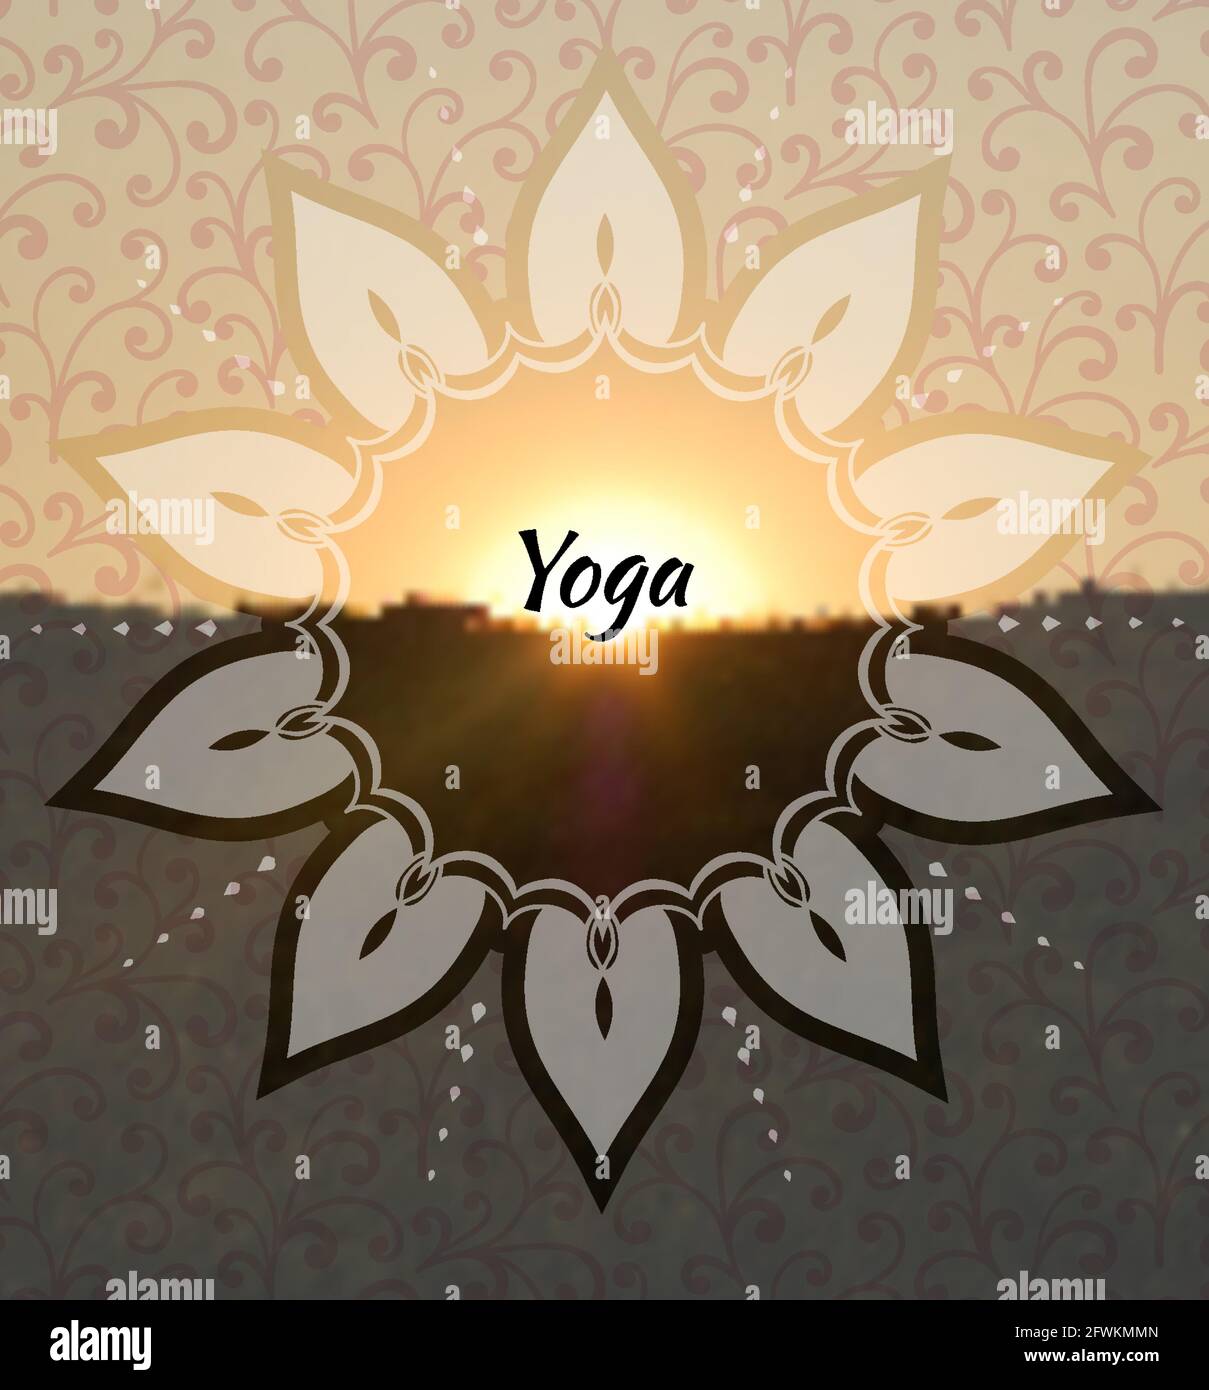 https://c8.alamy.com/comp/2FWKMMN/mandala-round-border-on-nature-sunset-background-vector-boho-mandala-yoga-template-psychedelic-psychology-earth-day-2FWKMMN.jpg